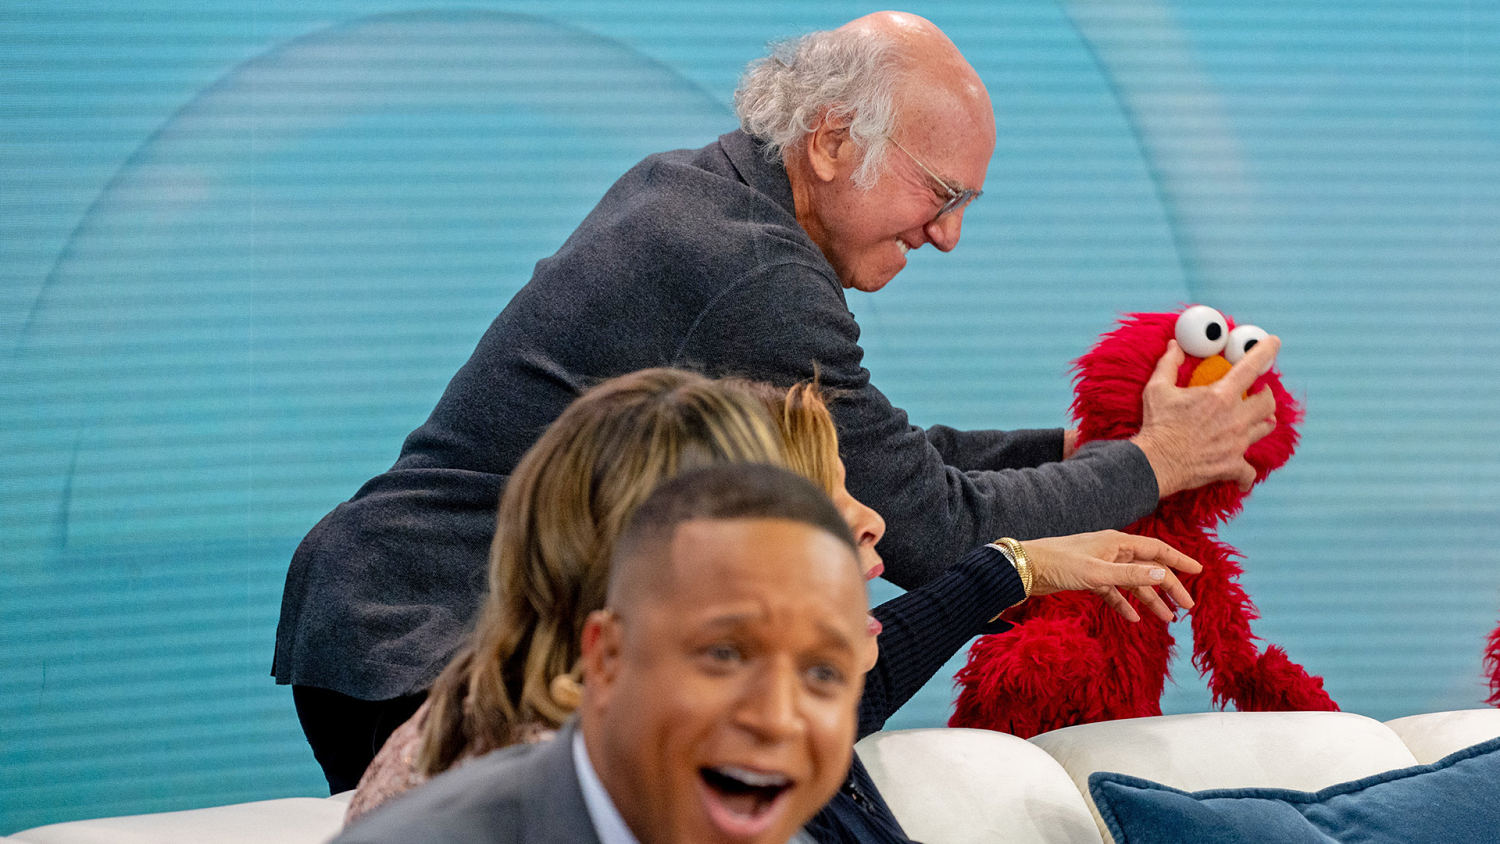 Actor Wil Wheaton blasts comedian Larry David for jostling beloved Elmo